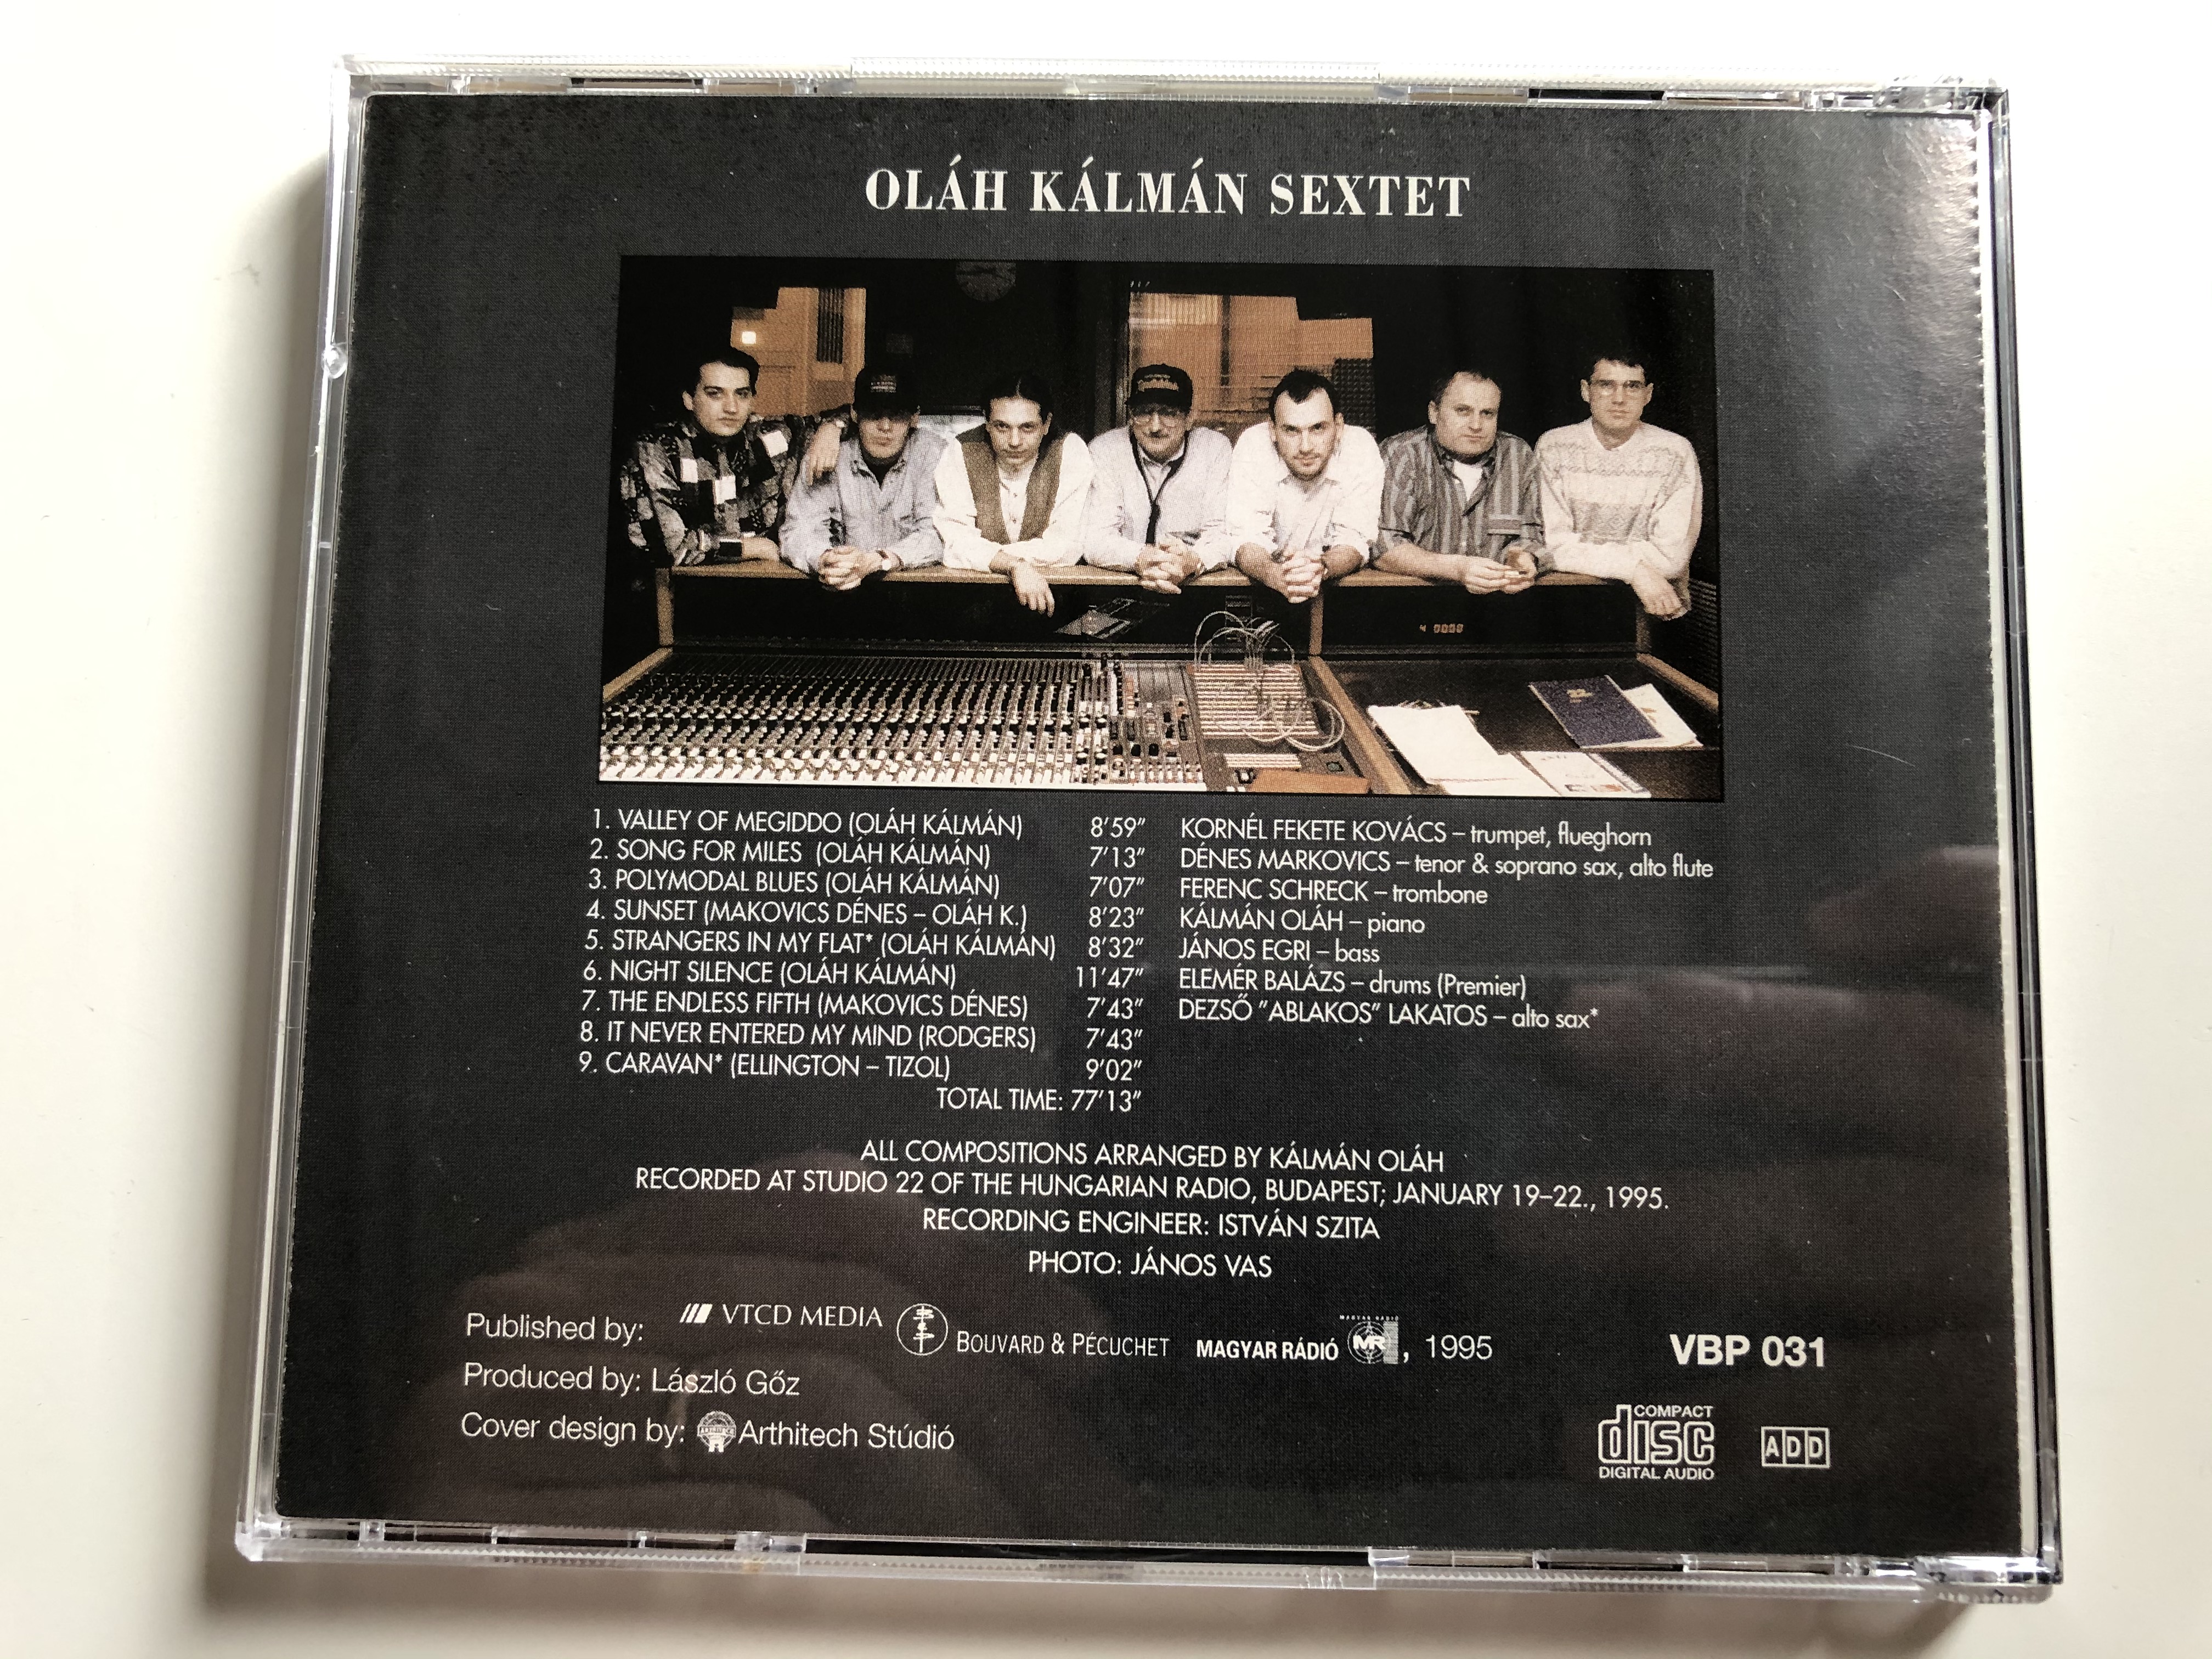 ol-h-k-lm-n-sextet-night-silence-featuring-dezso-ablakos-lakatos-feket-kovacs-kornel-makovics-denes-schreck-ferenc-balazs-elemer-egri-janos-bouvard-p-cuchet-records-audio-cd-199-6-.jpg